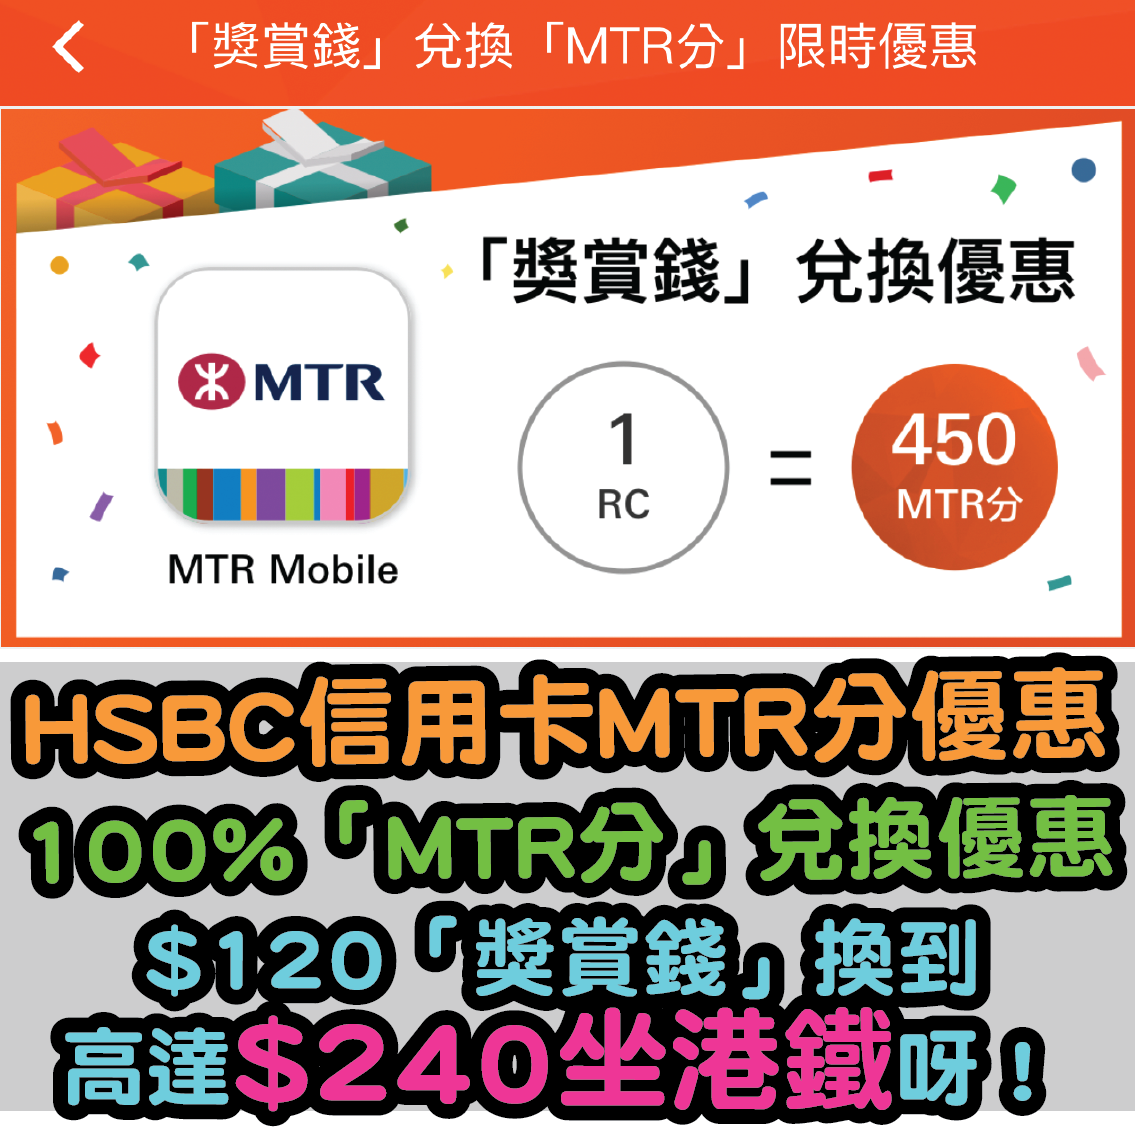 【HSBC信用卡MTR分優惠】100%「MTR分」兌換優惠！$120「獎賞錢」換到高達$240坐港鐵呀！